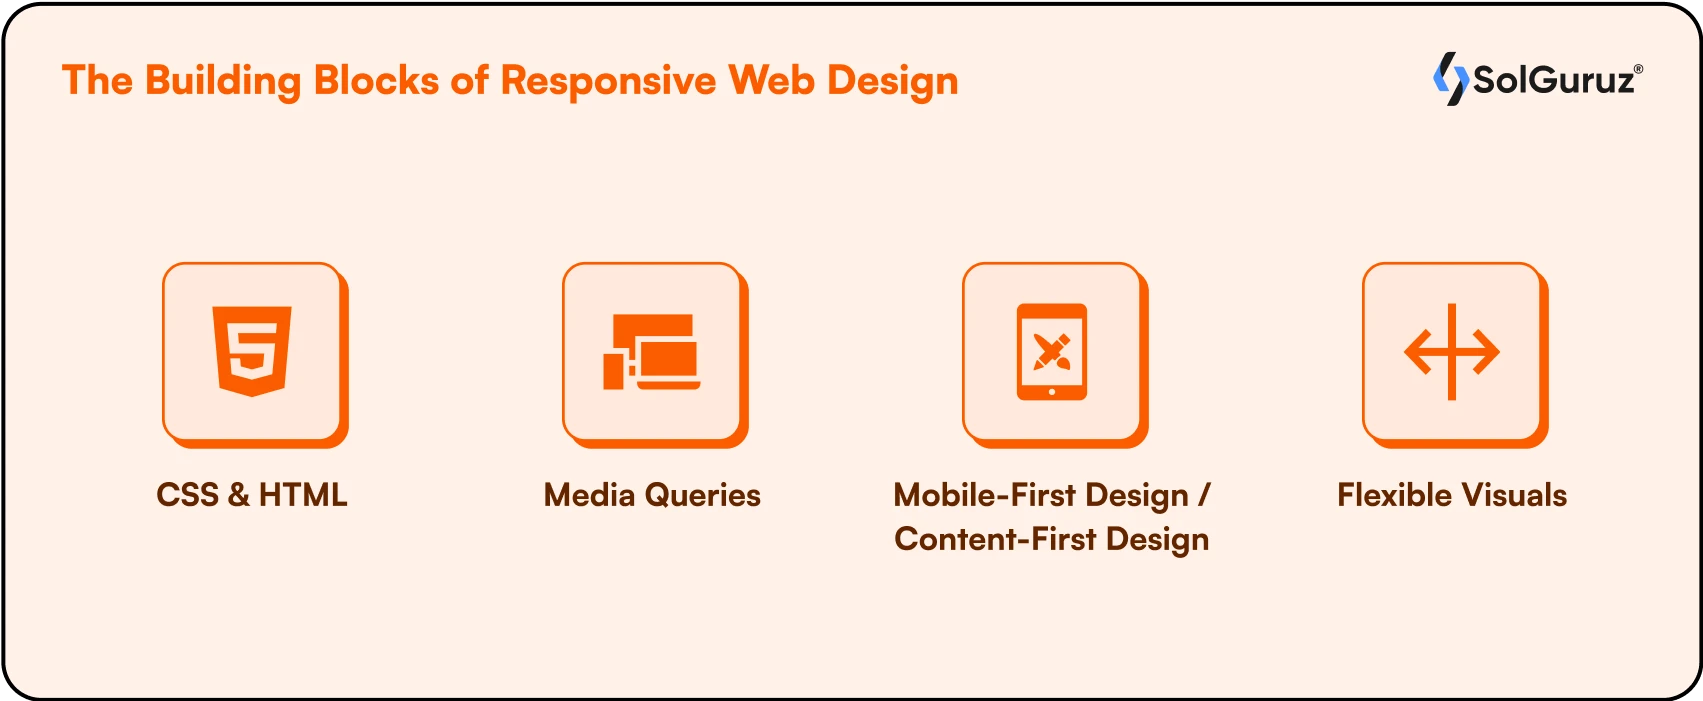 The Building Blocks of Responsive Web Design